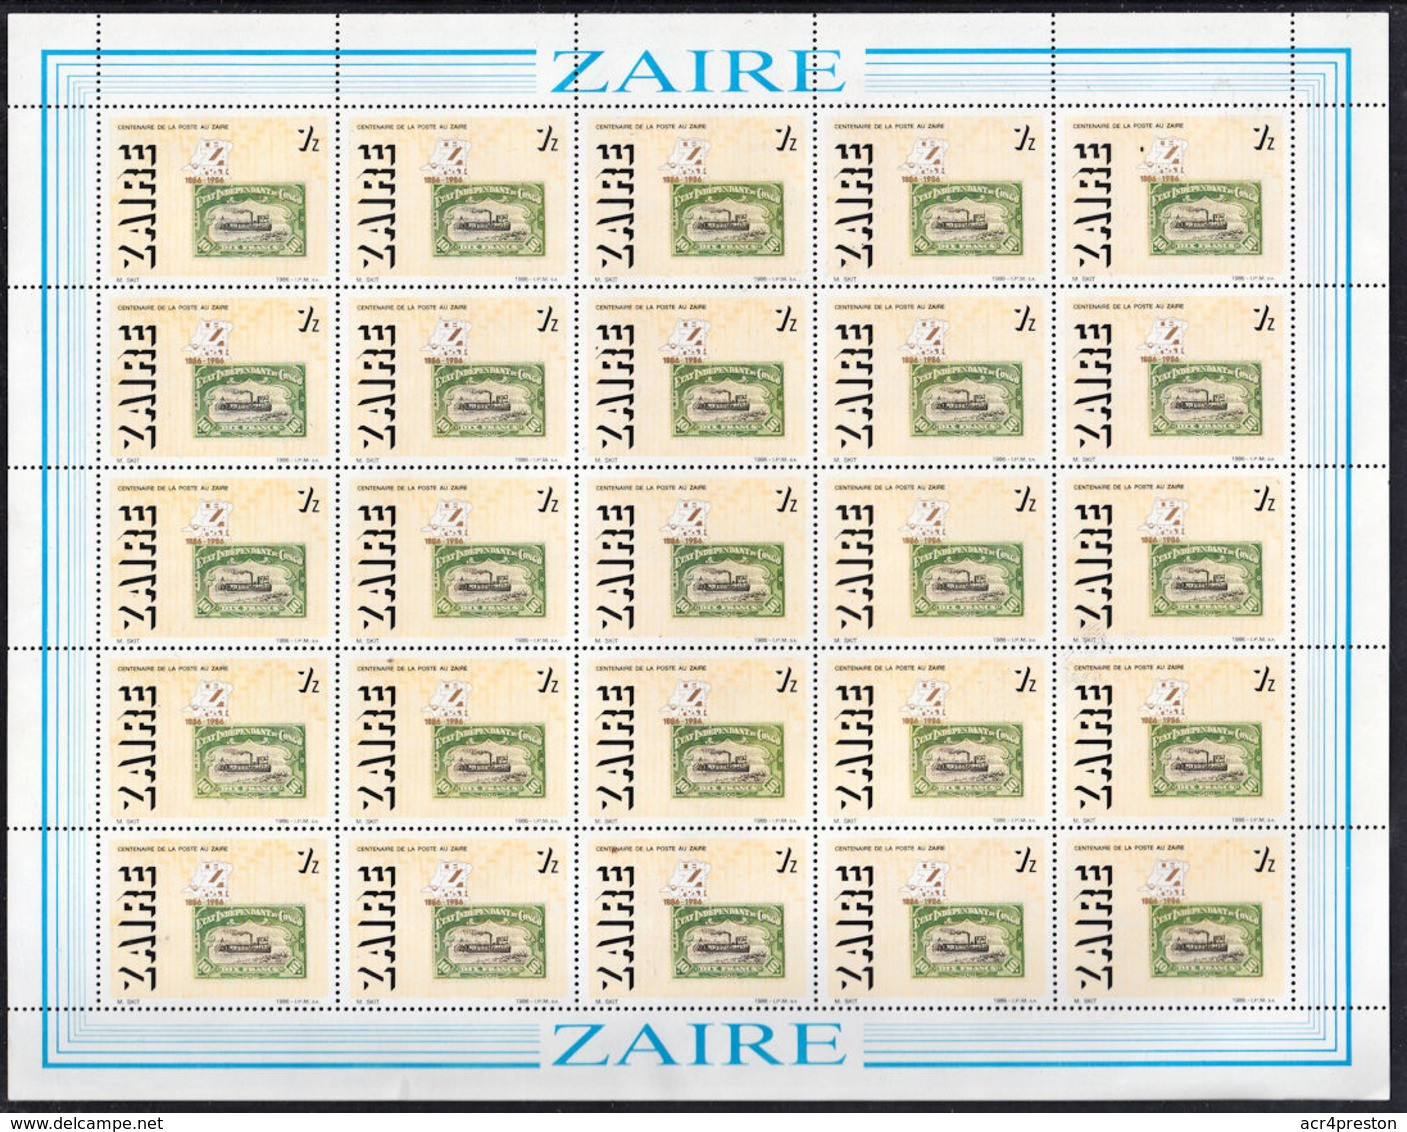 D0190 ZAIRE 1988, SG 1267 'Cenzapost' Stamp Centenary, Complete Sheet, MNH - Neufs